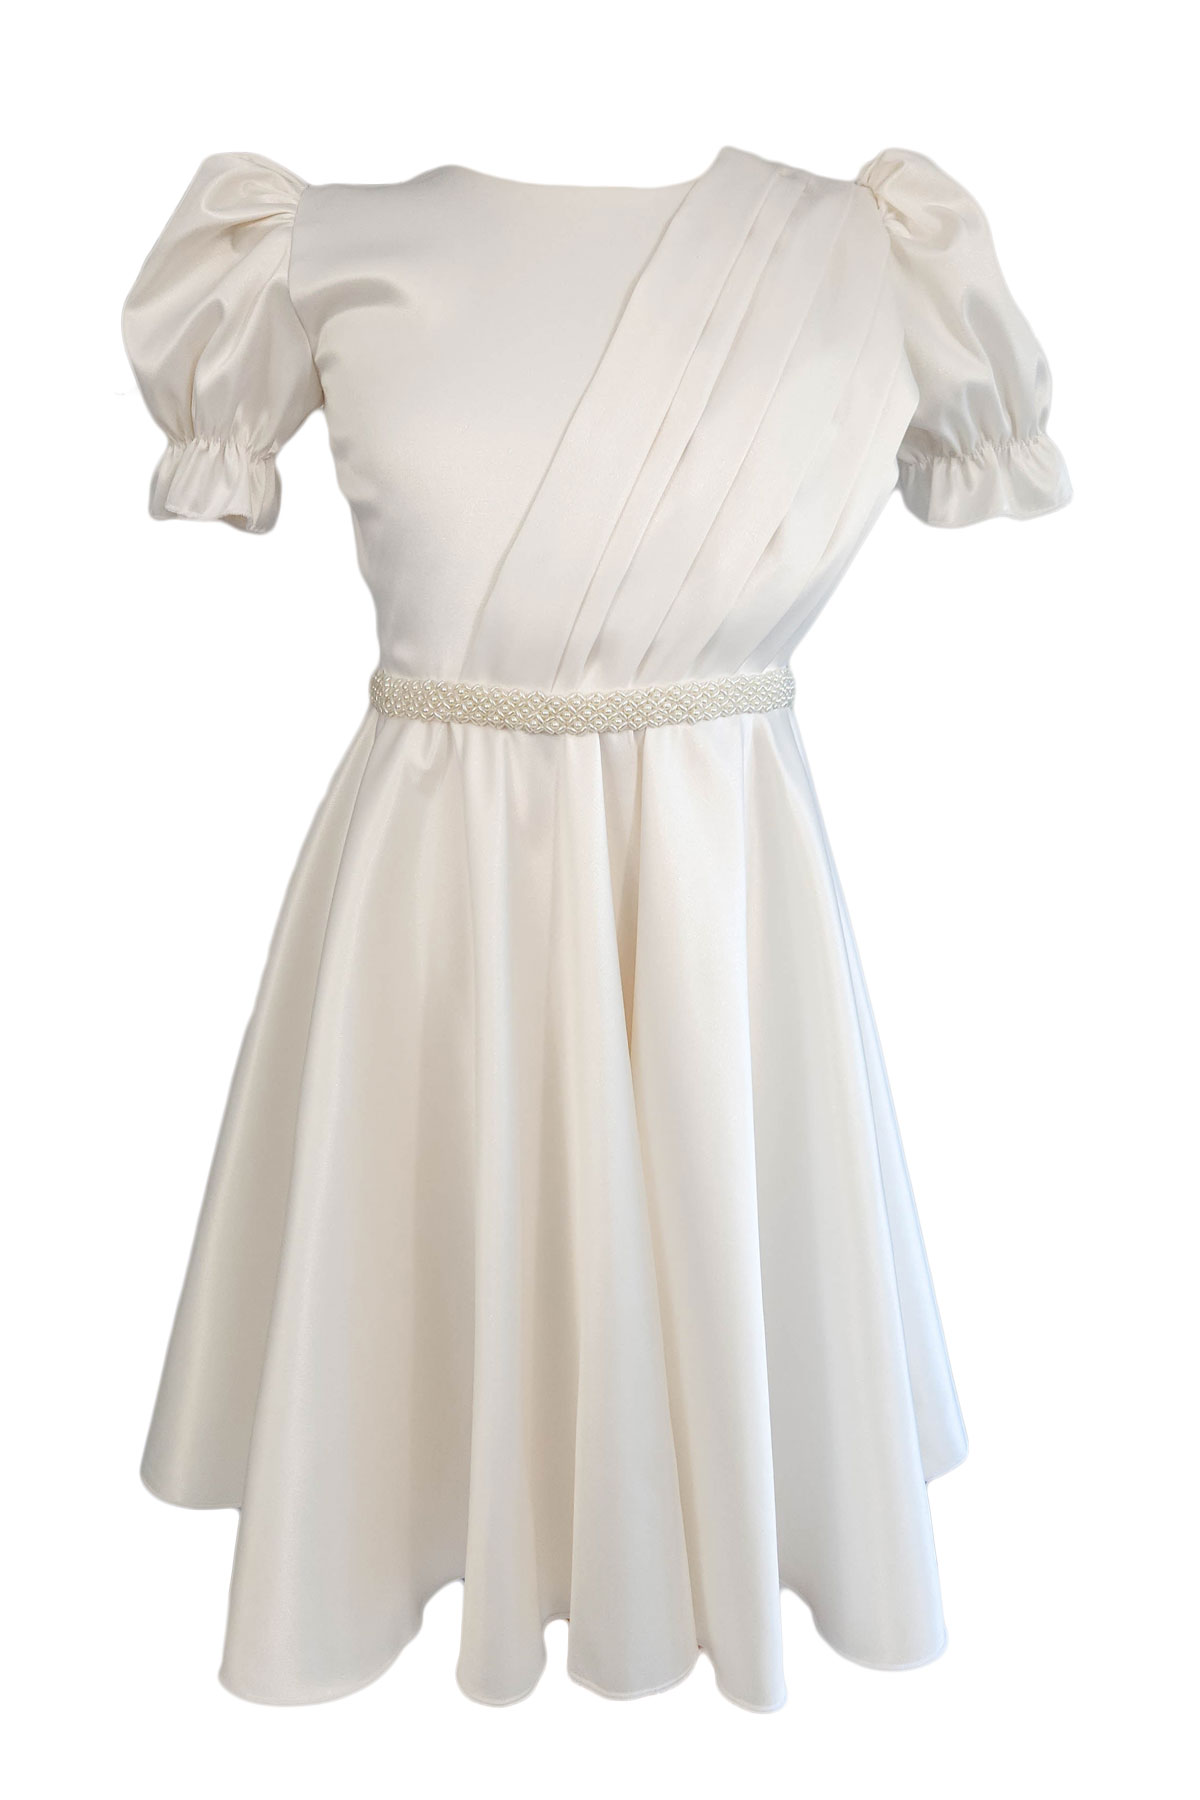 Rochie eleganta pentru fete, model Cristina, culoare ivoire